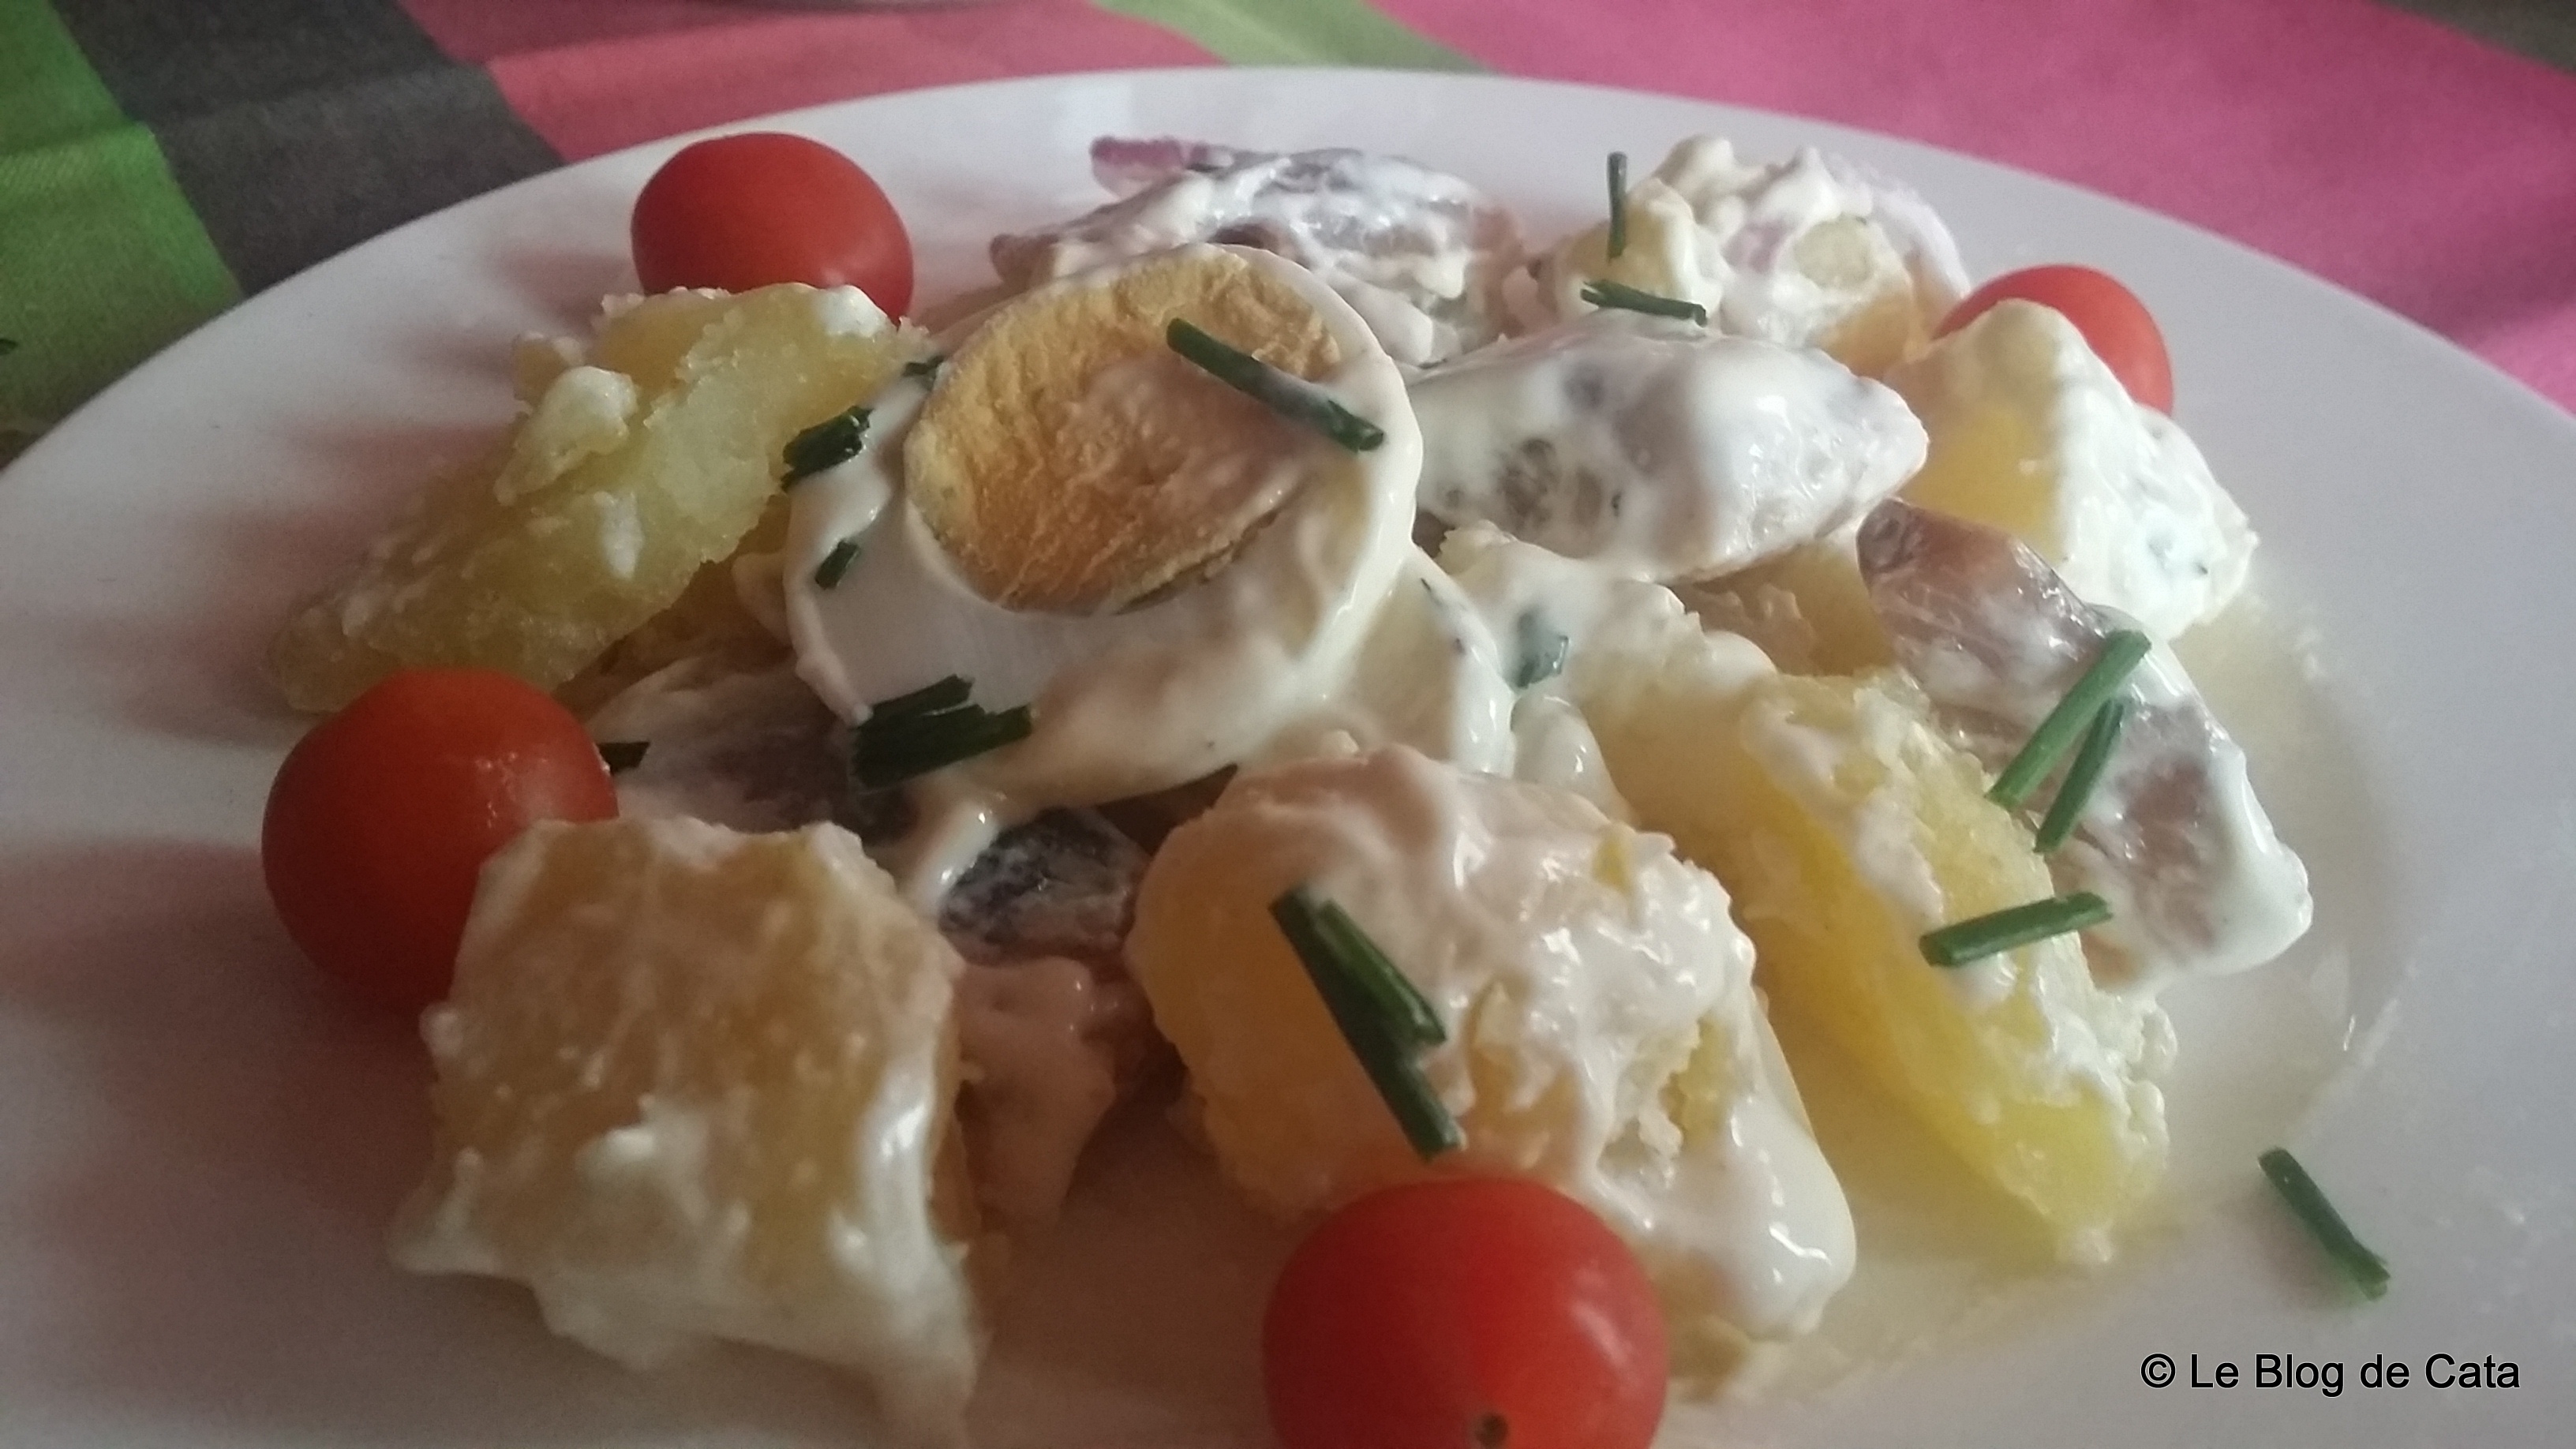 Salata cu hering afumat si cartofi